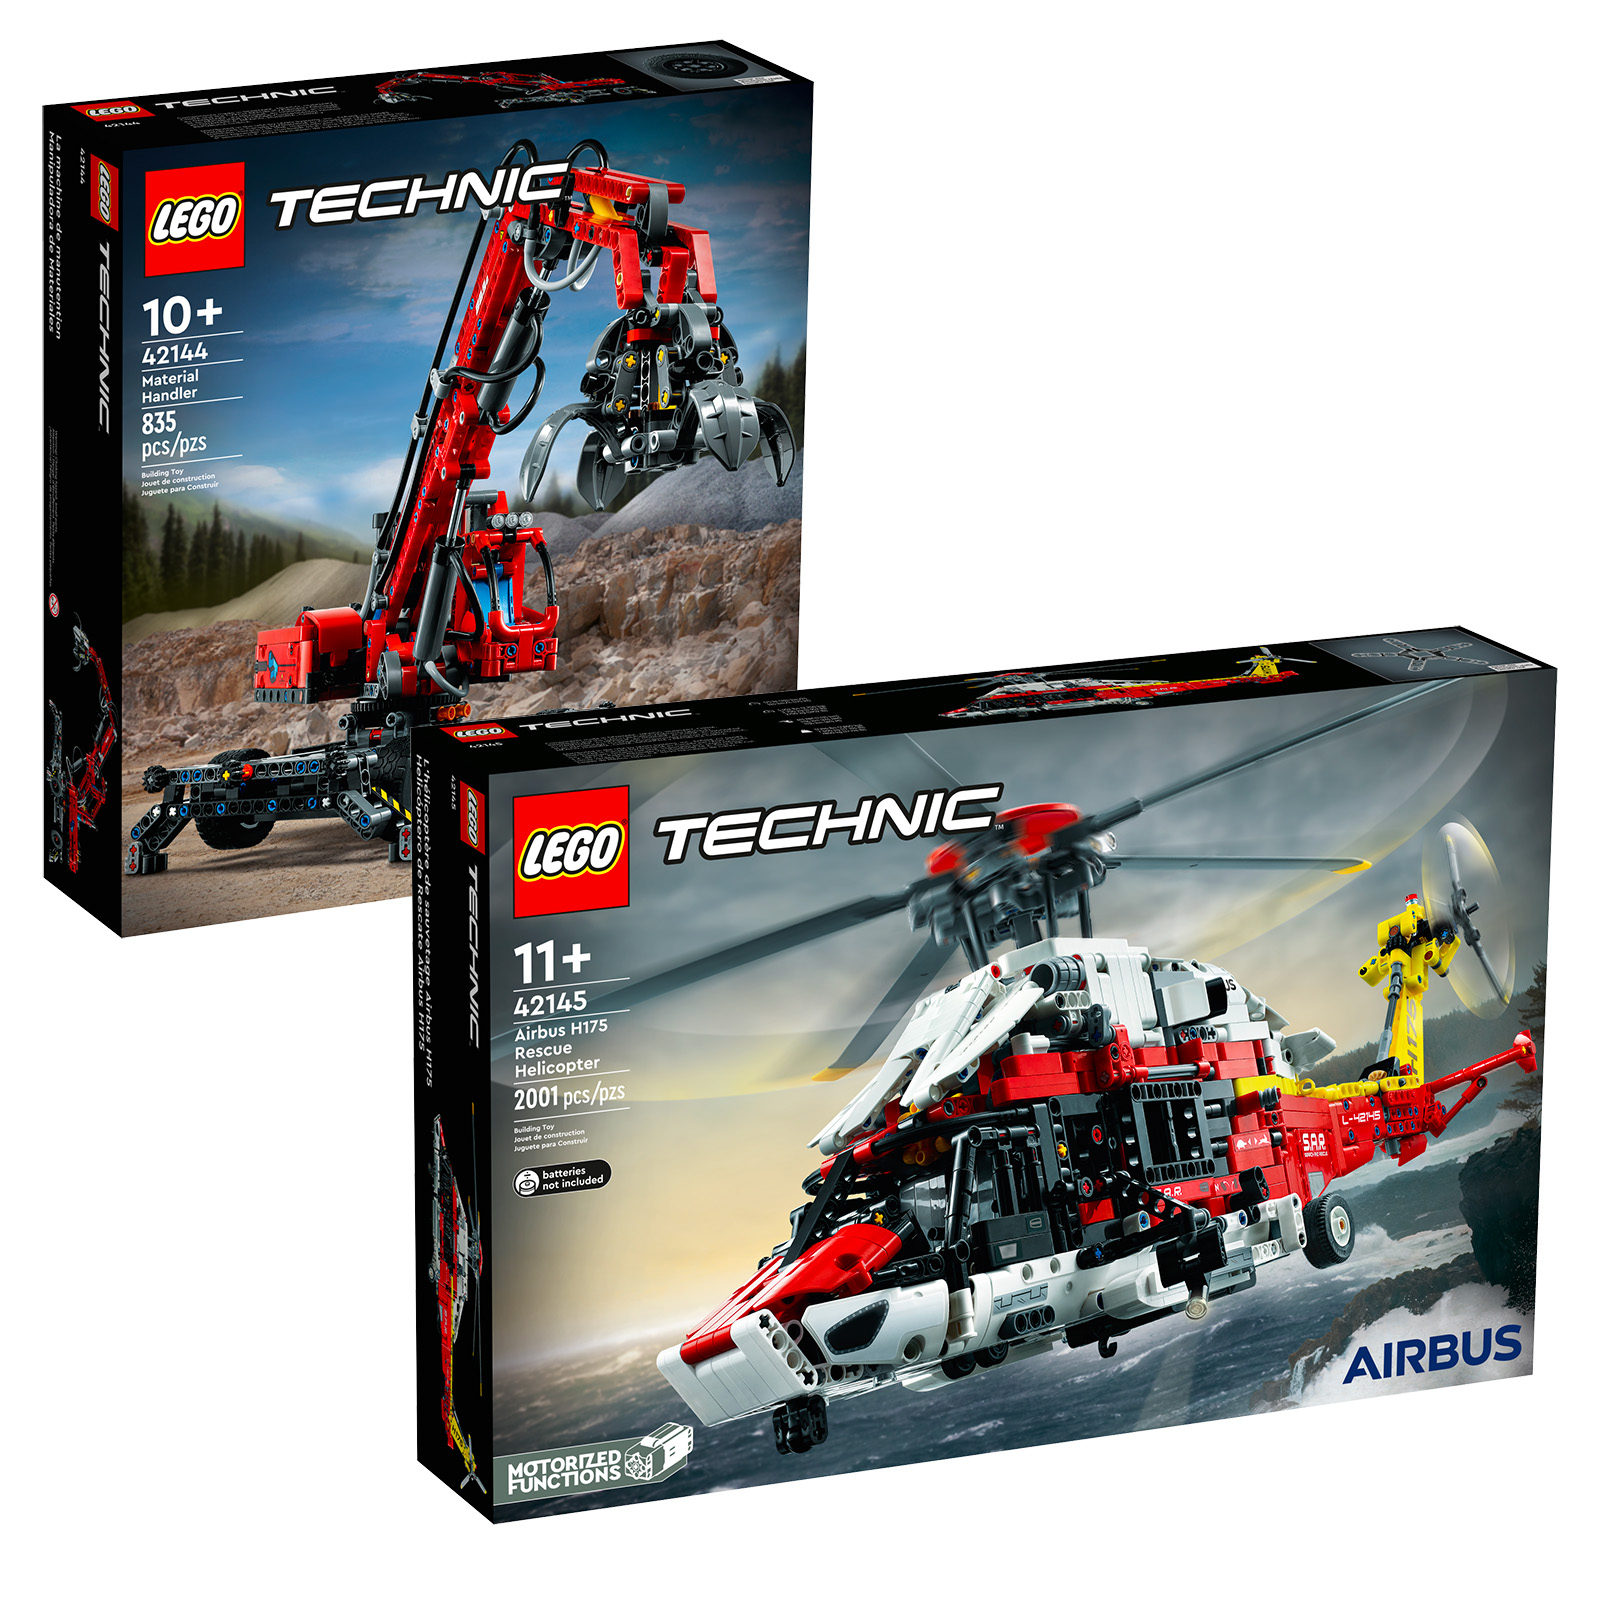 Di Kedai LEGO: LEGO Technic 42144 Material Handler dan 42145 Airbus H175 Rescue Helicopter set dalam talian